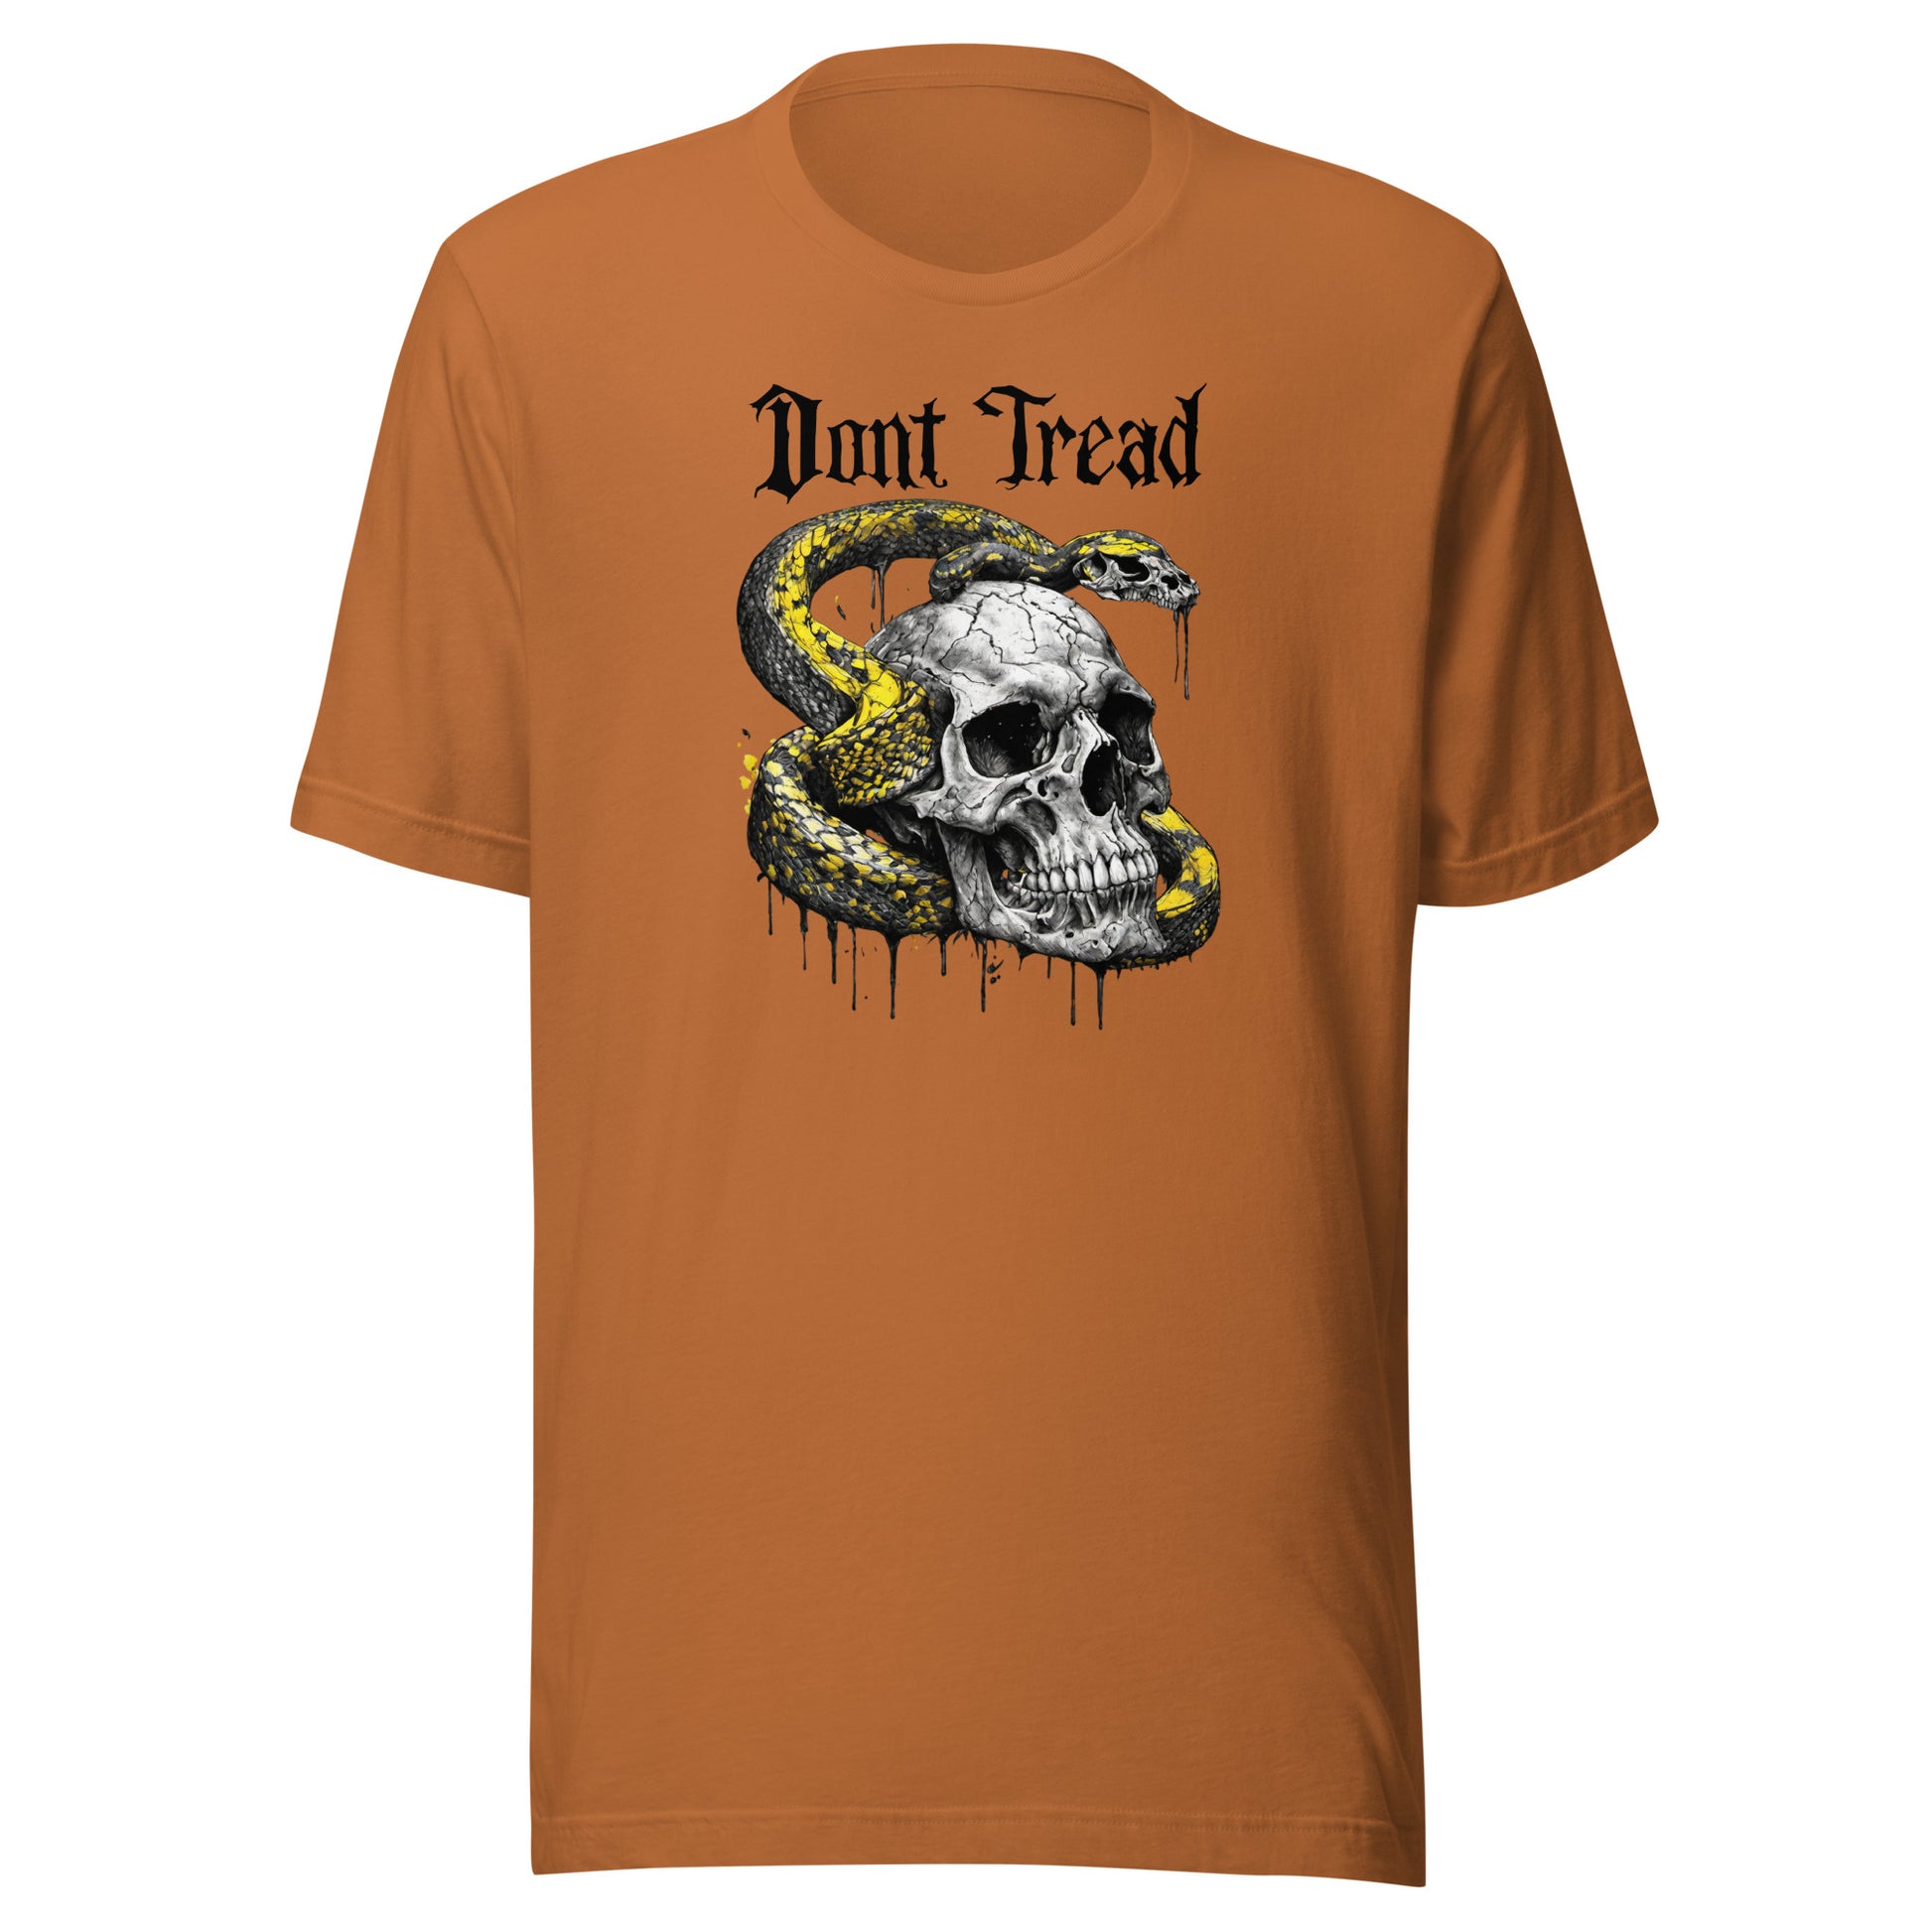 Don't Tread Snake & Skull 2nd Amendment Men's T-Shirt Toast